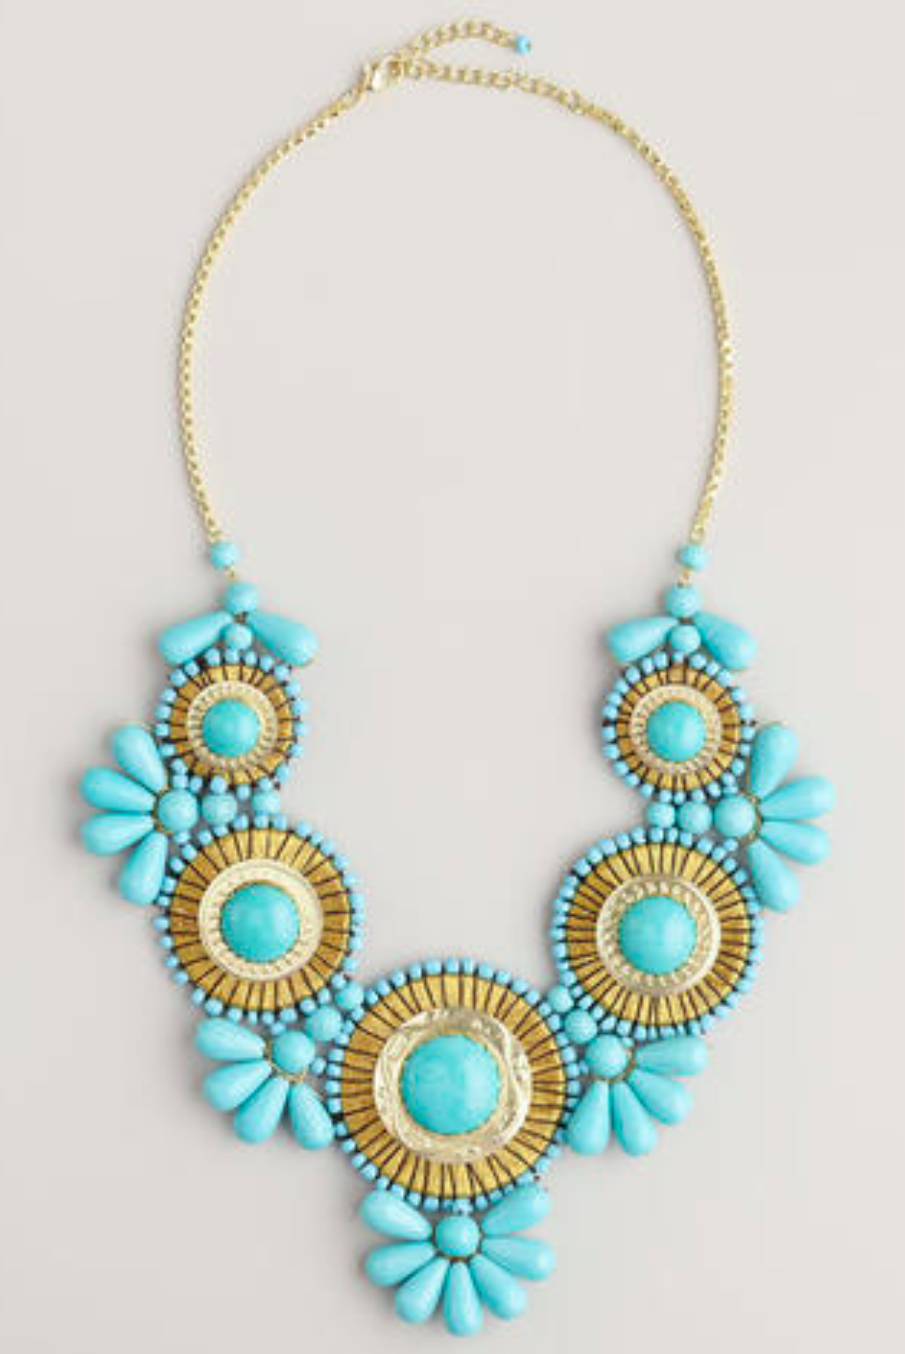 Turquoise Statement Necklace Bib Bubble Necklace Vivid Designs Jewelry